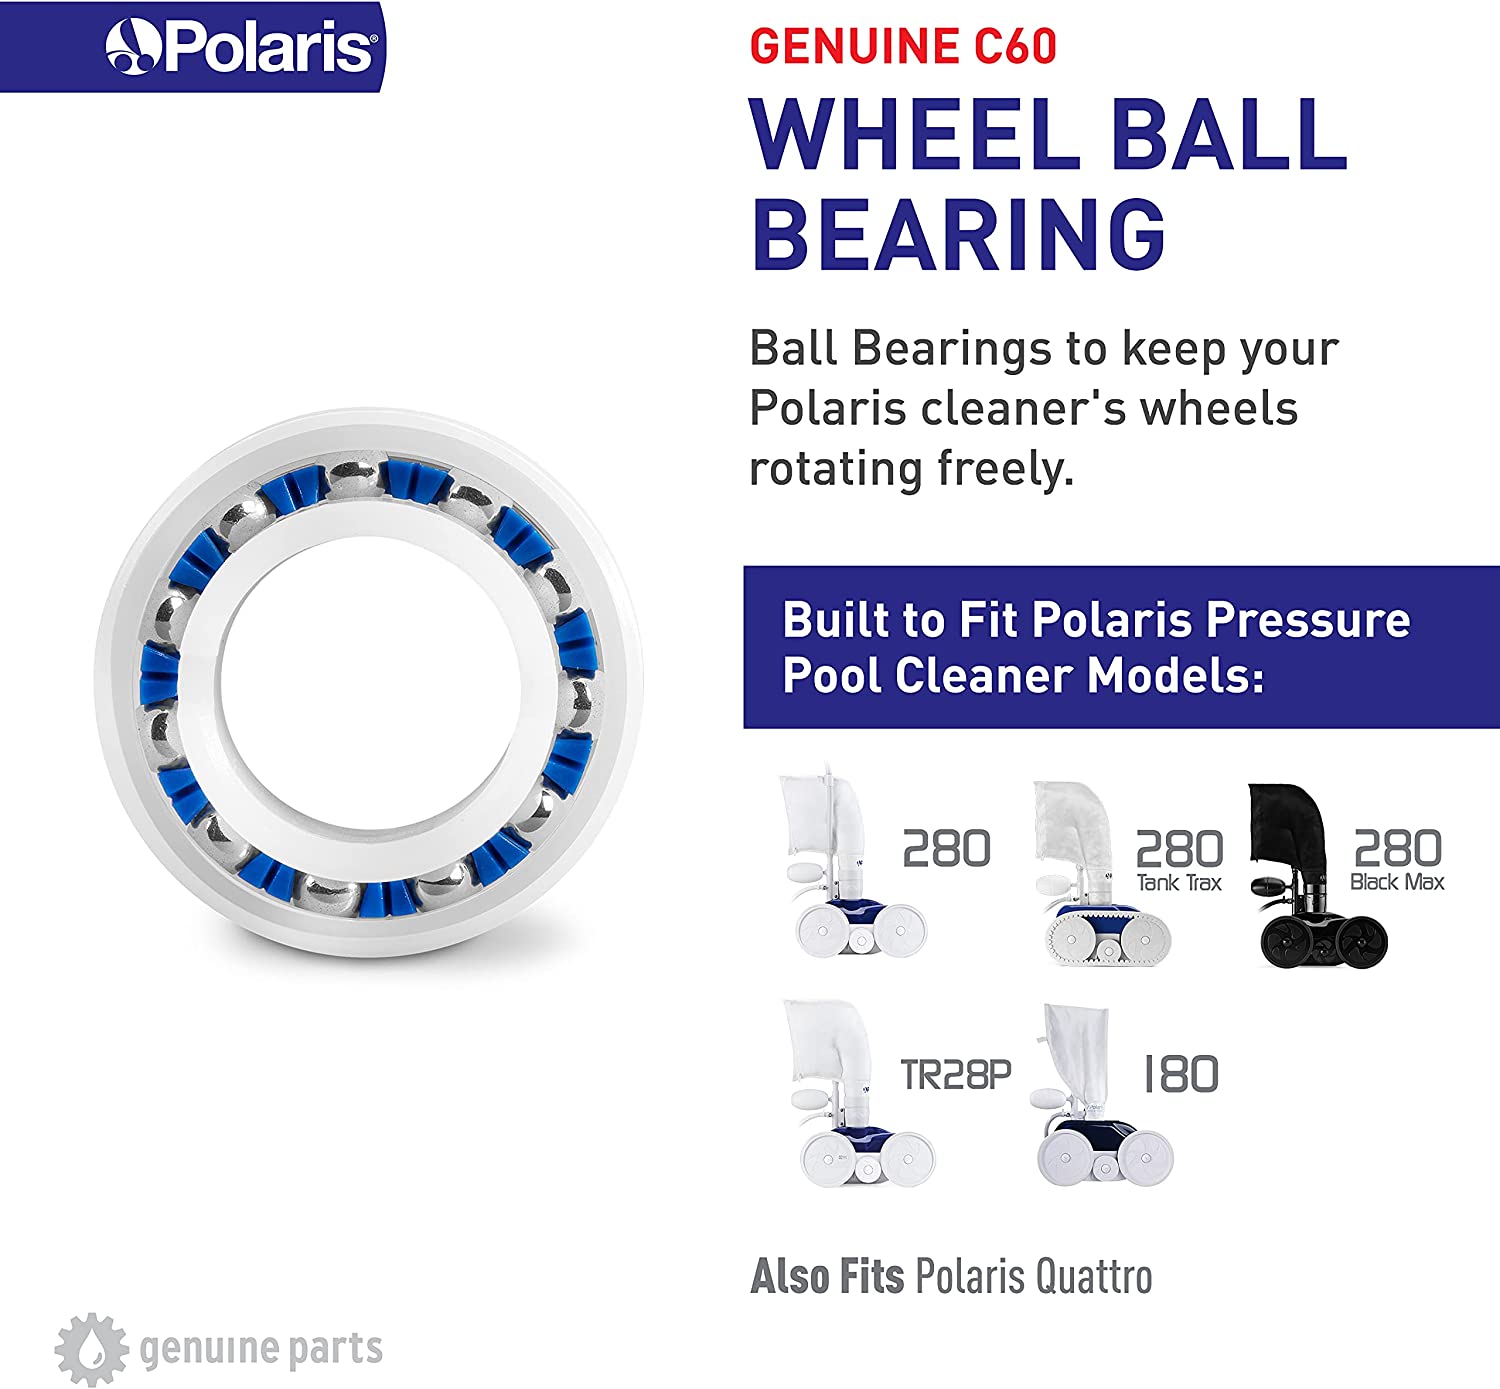 Polaris Wheel Ball Bearing - C60 - The Pool Supply Warehouse